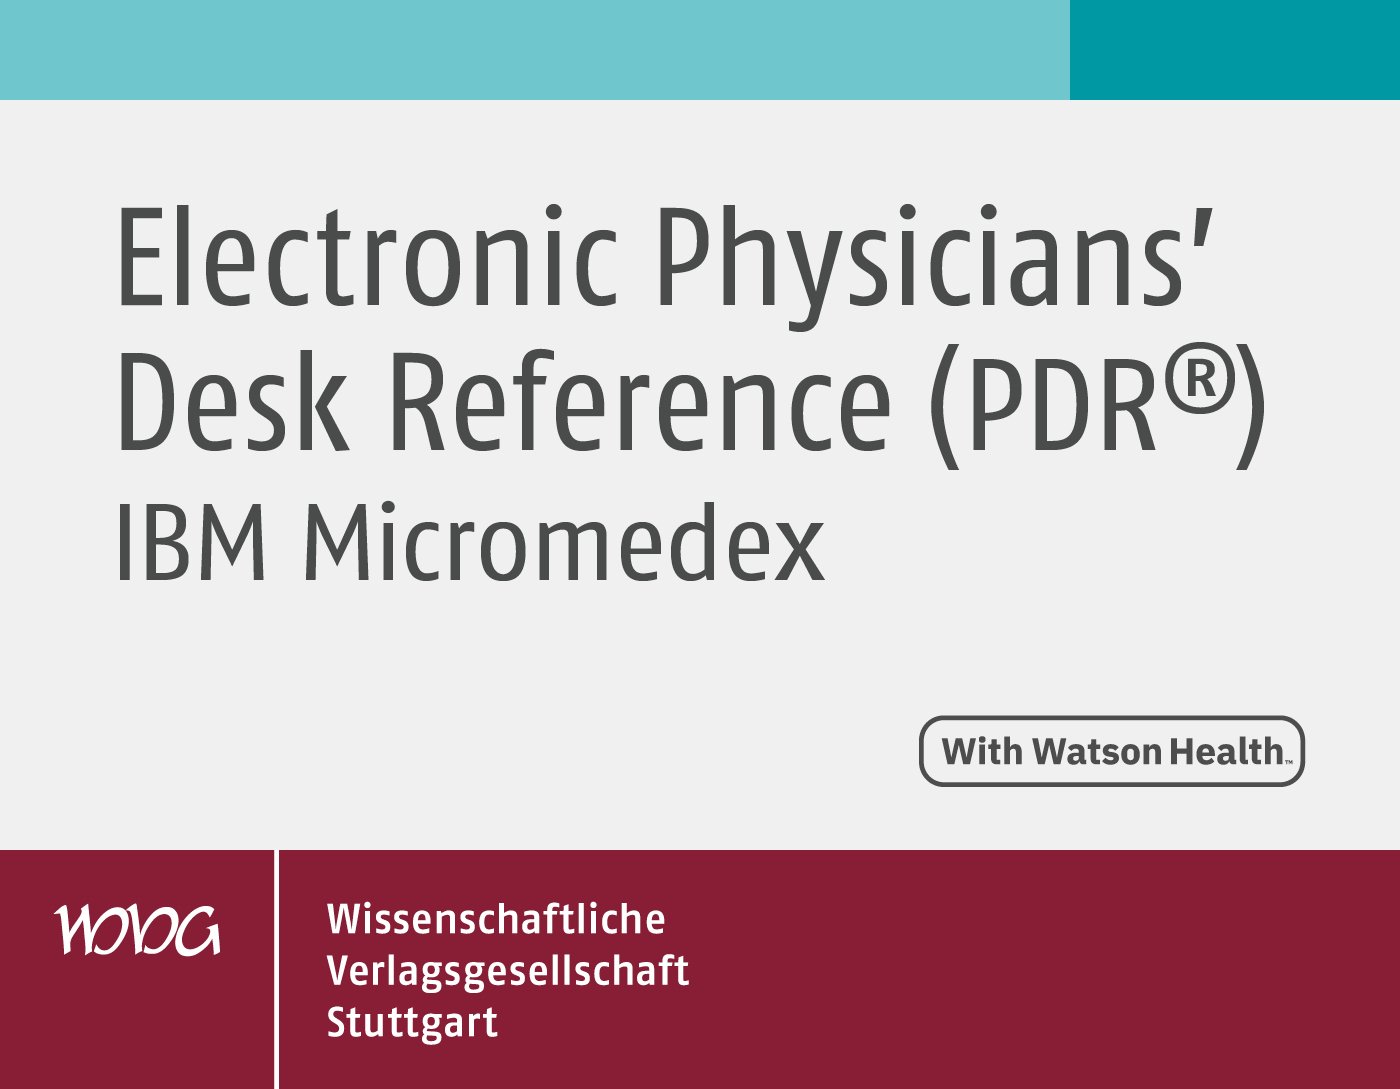 Electronic Physicians Desk Reference Pdr Shop Deutscher